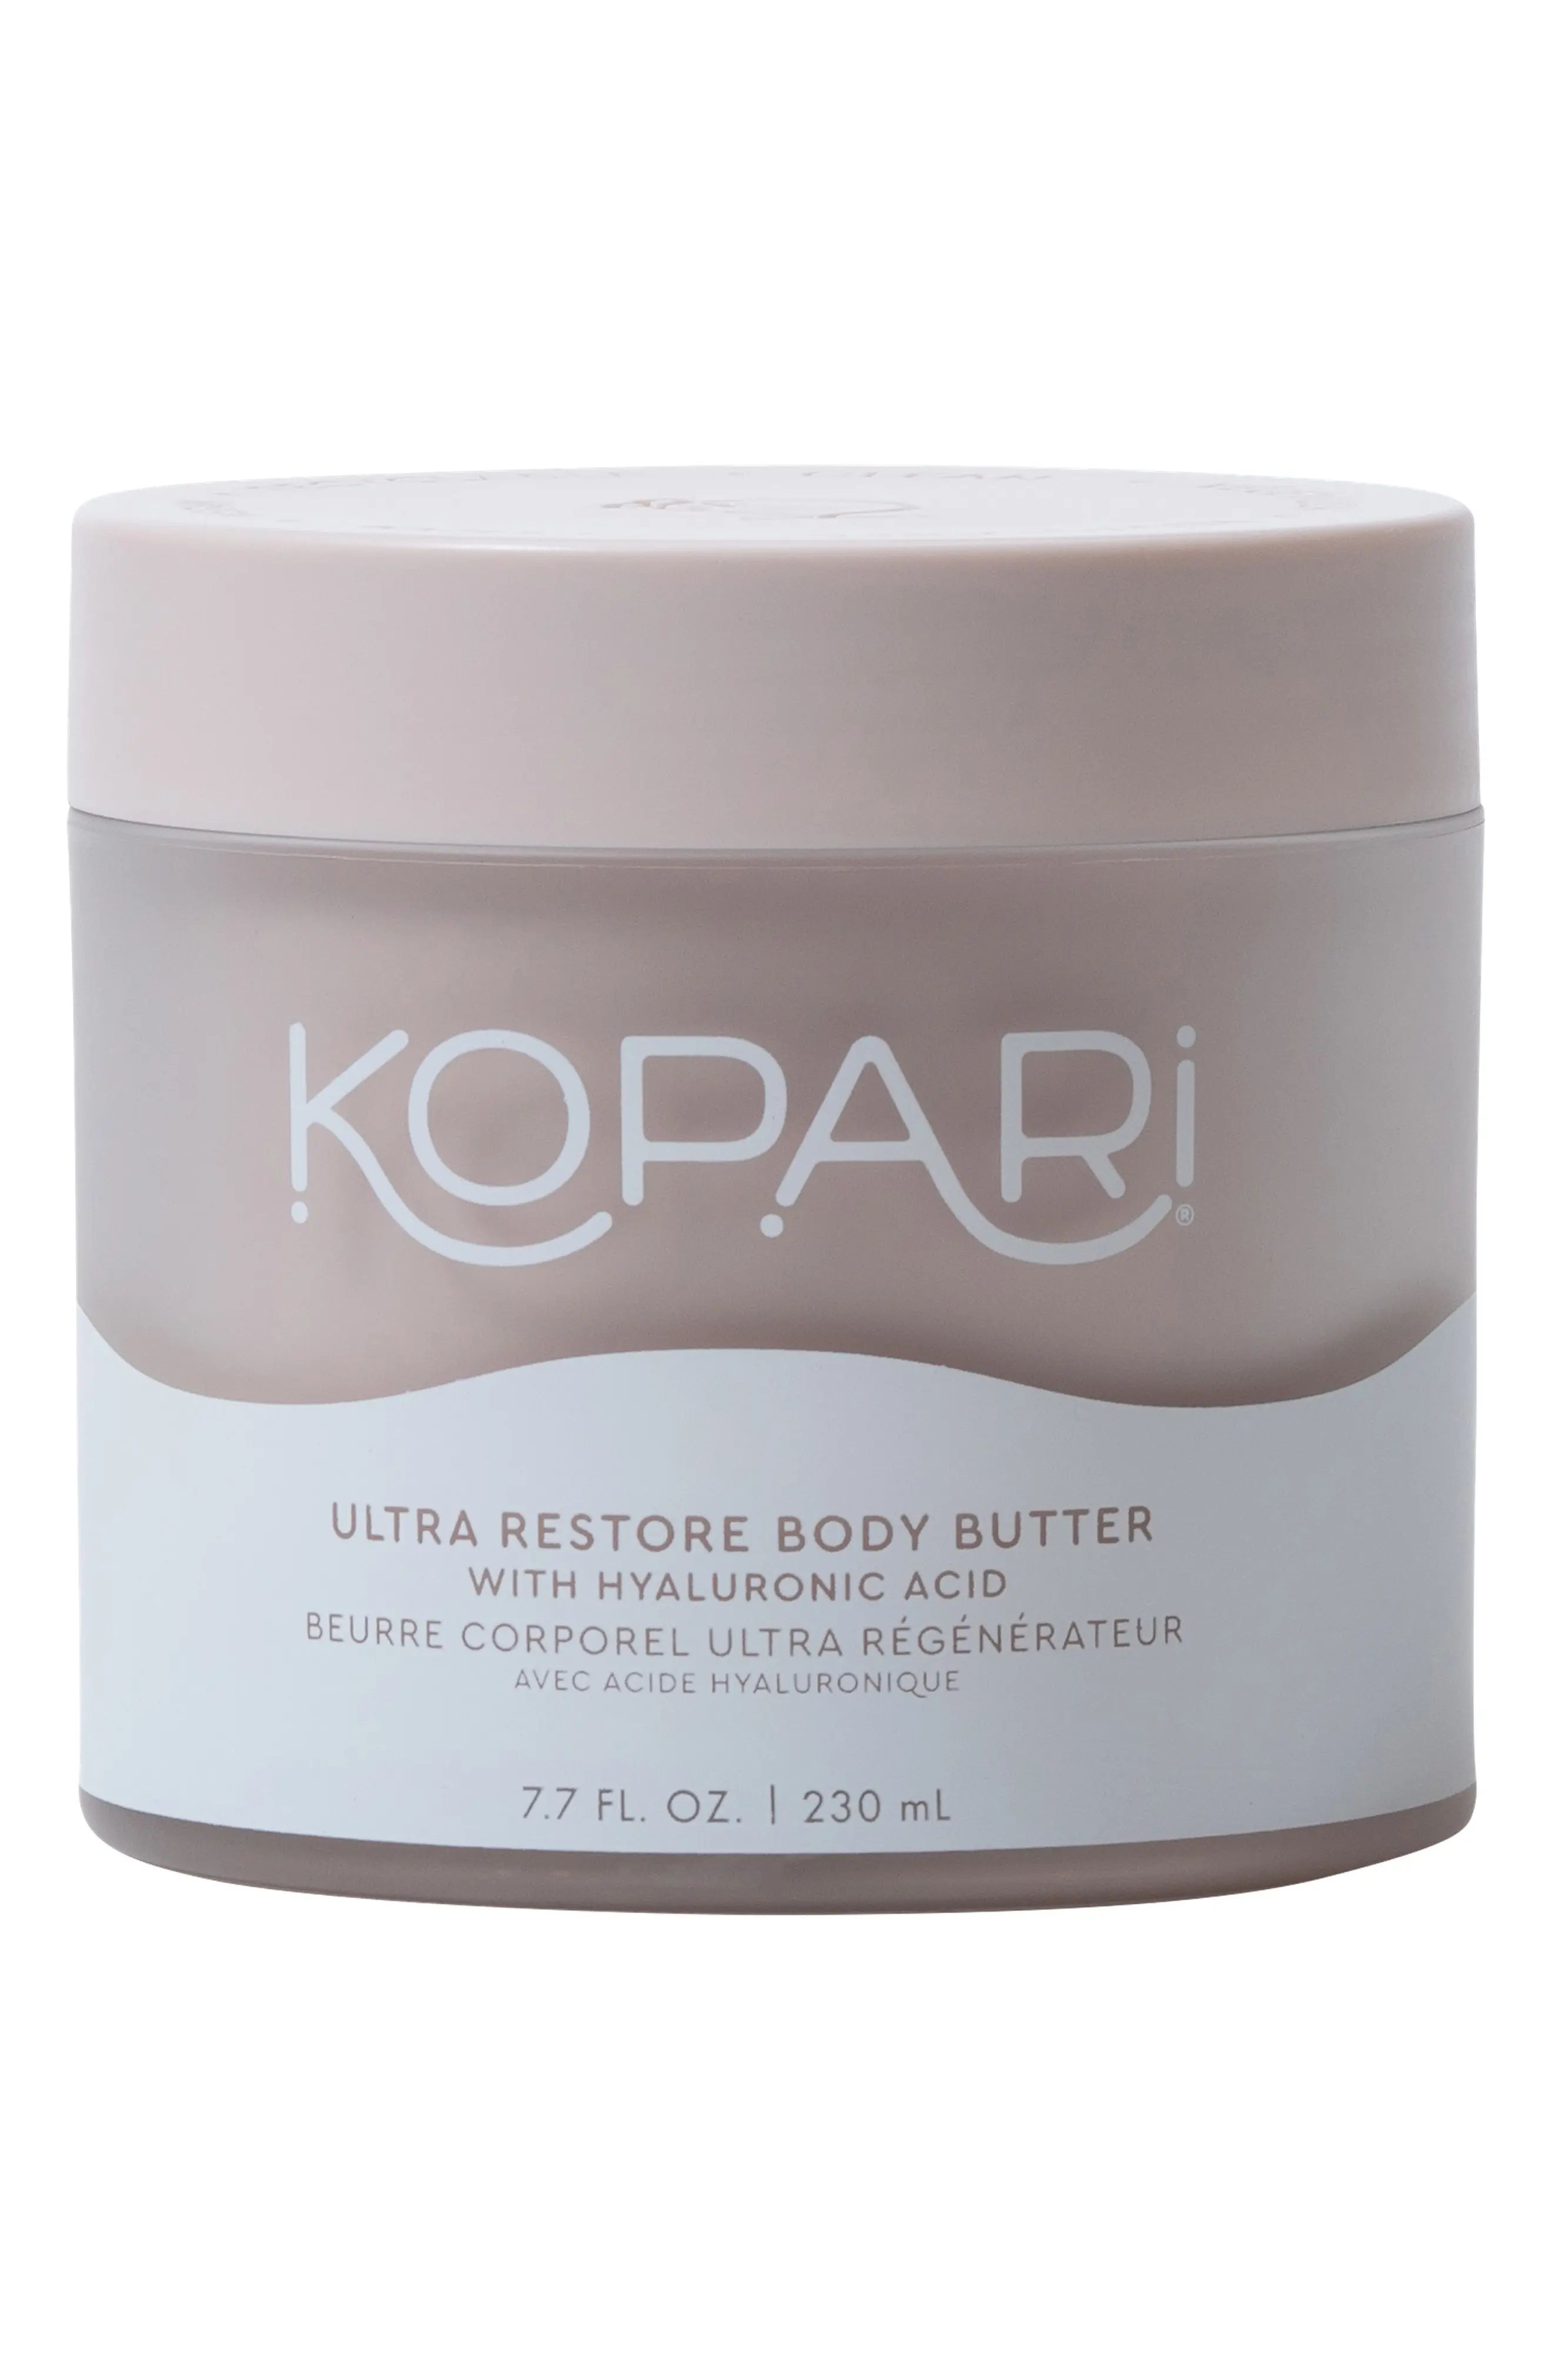 Kopari Ultra Restore Body Butter at Nordstrom, Size 7.7 Oz | Nordstrom